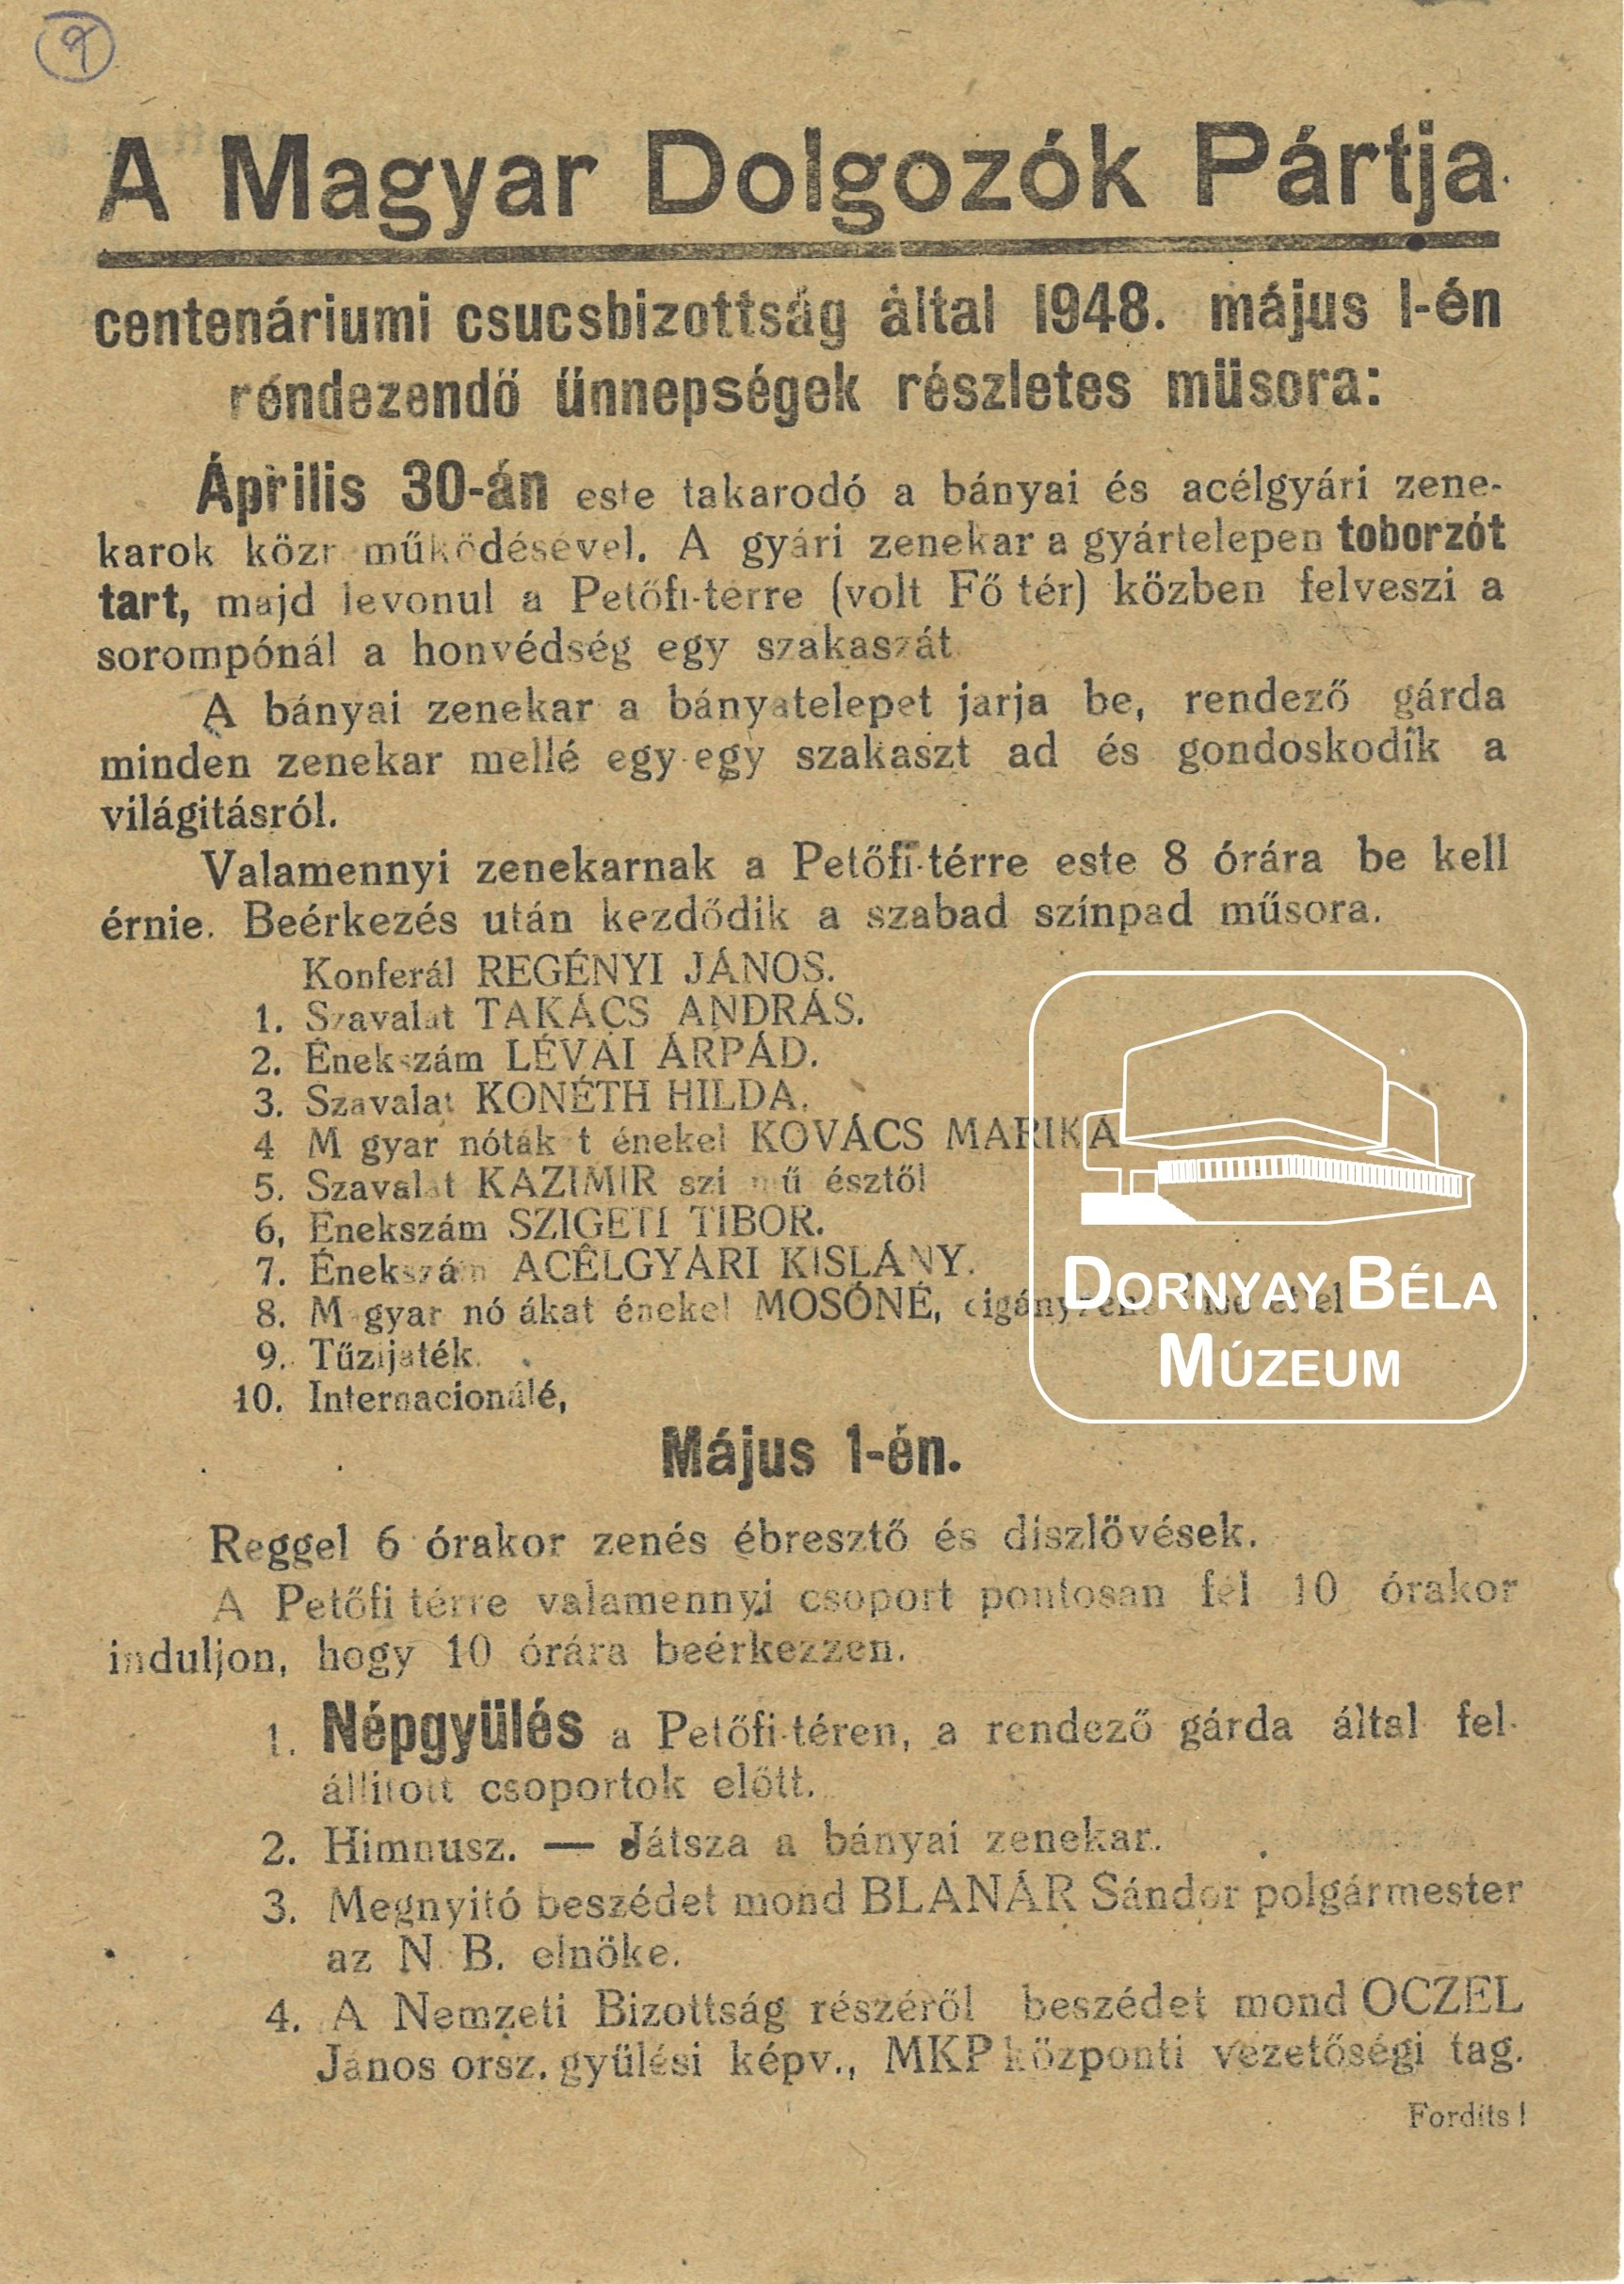 MDP 1948. május 1-i programja. (Dornyay Béla Múzeum, Salgótarján CC BY-NC-SA)